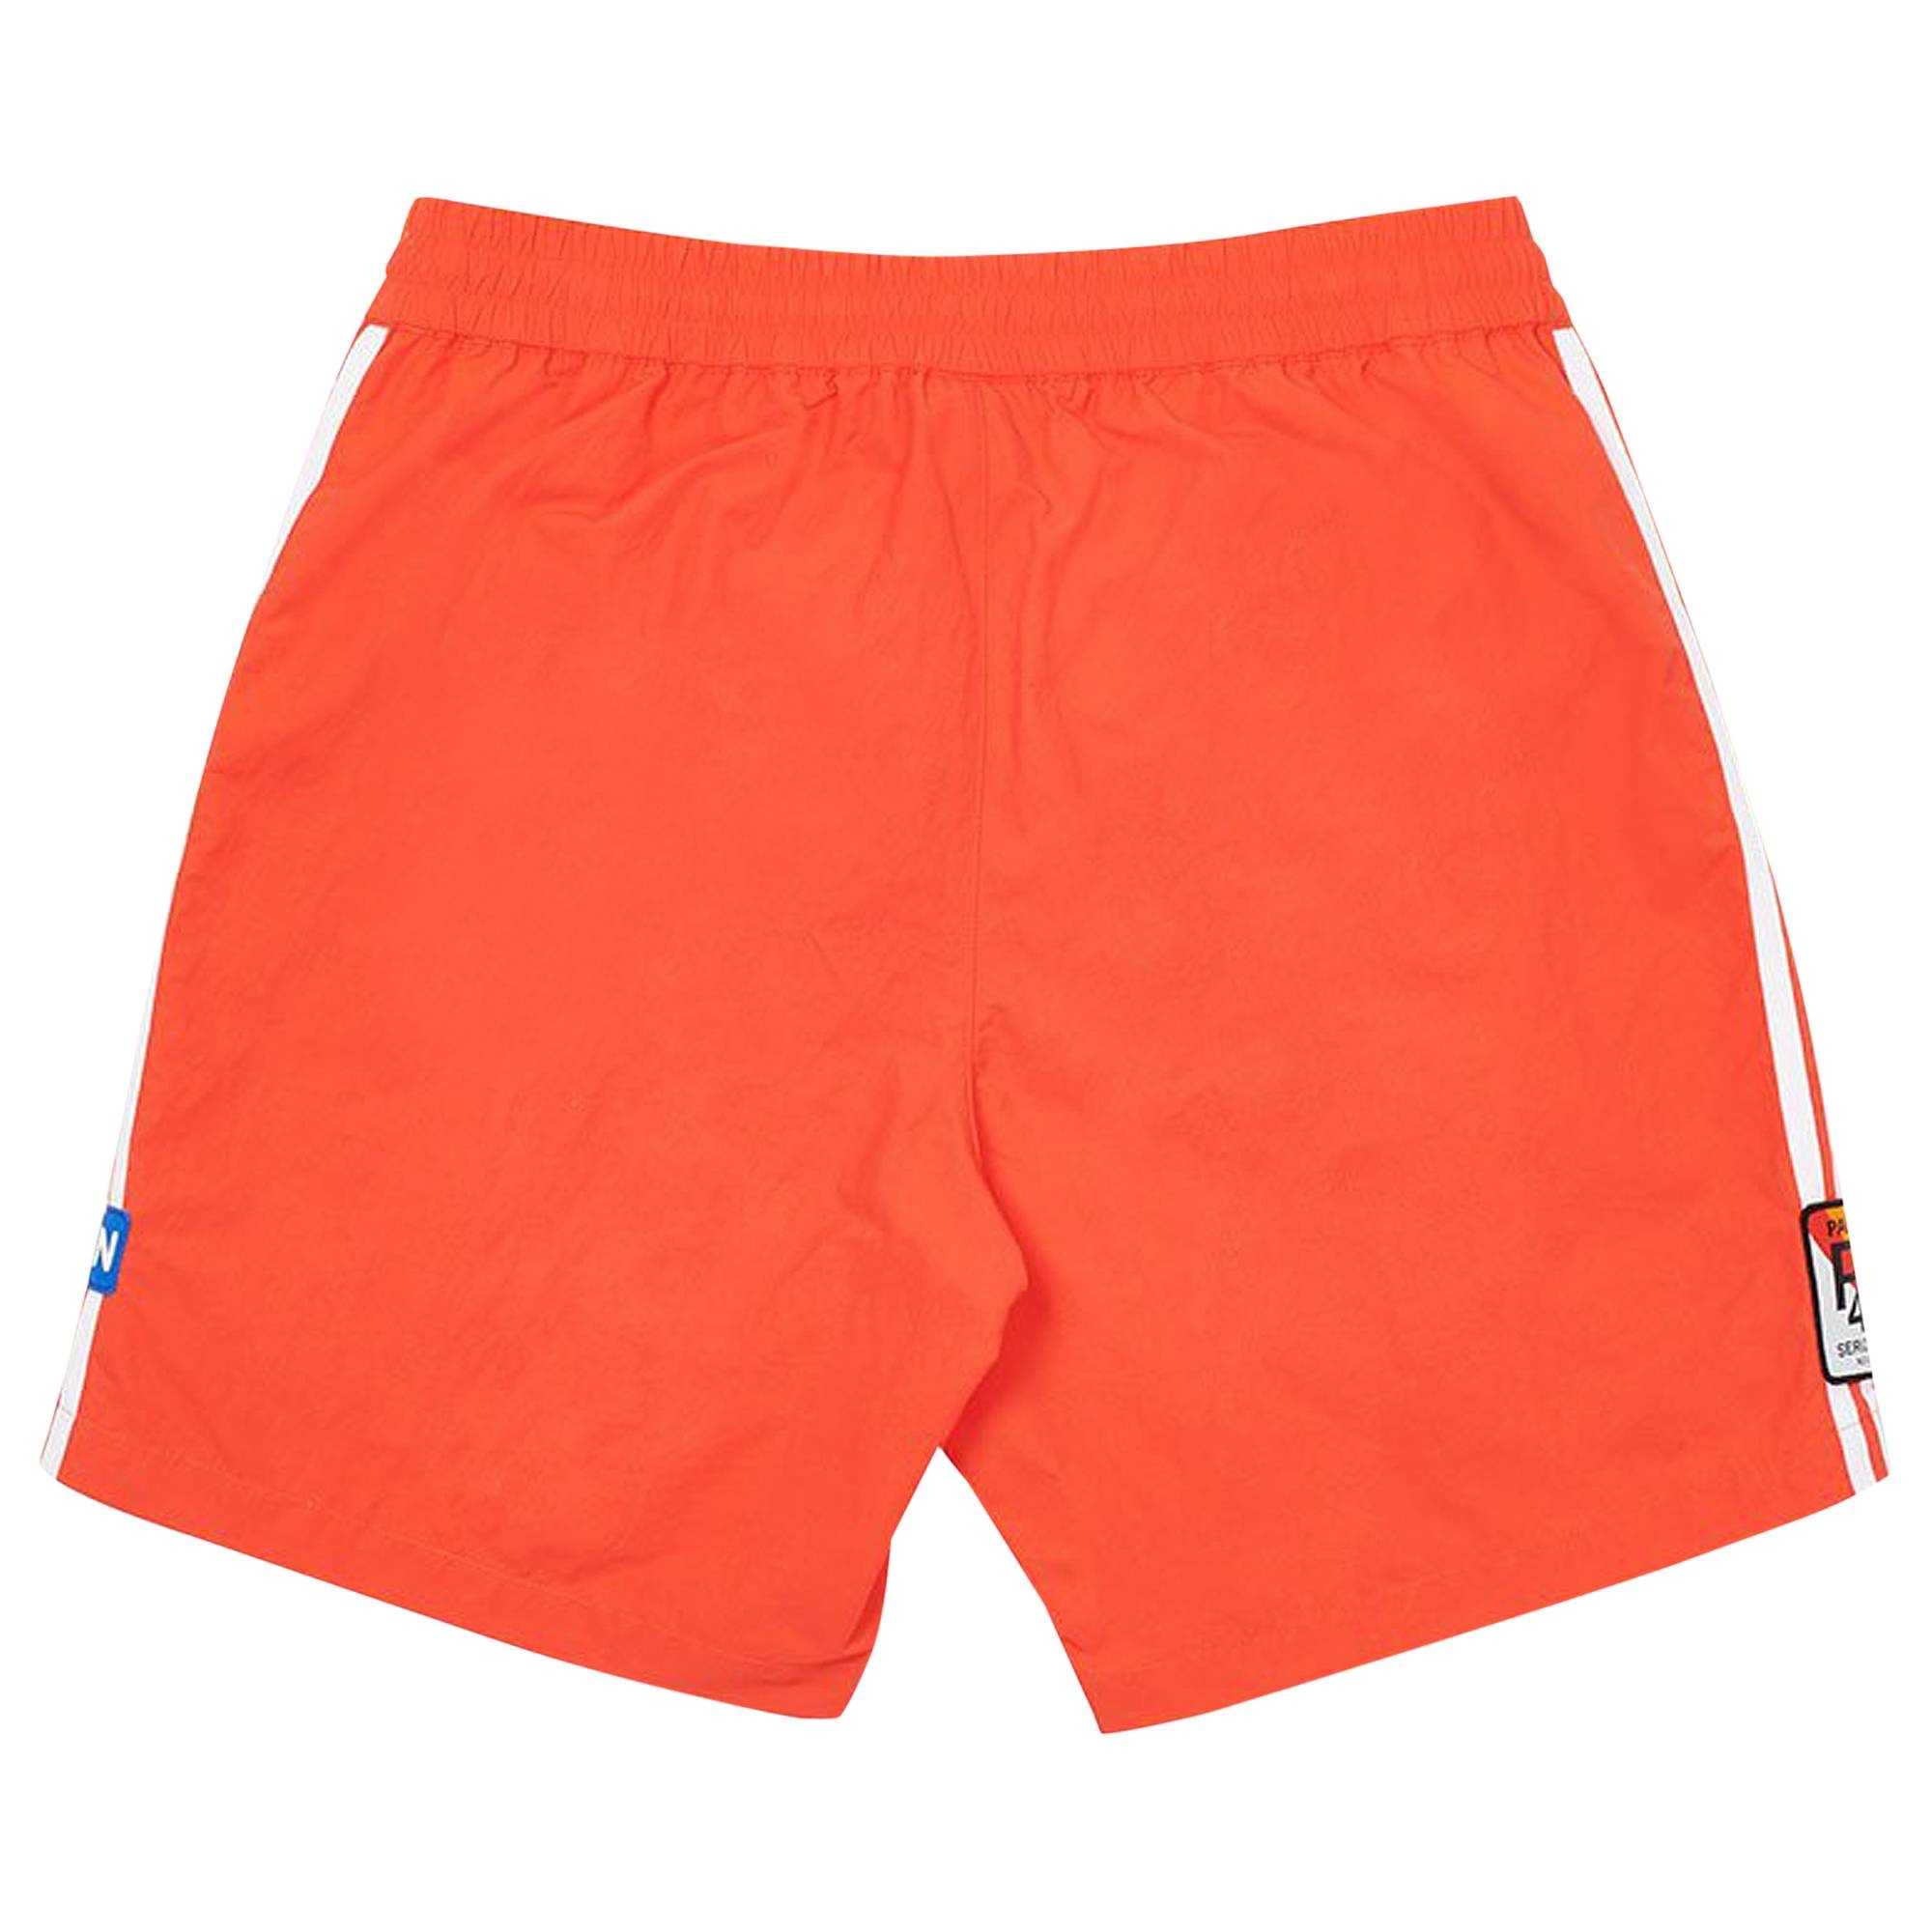 Palace x adidas Sunpal Shorts 'Bright Orange' - 2